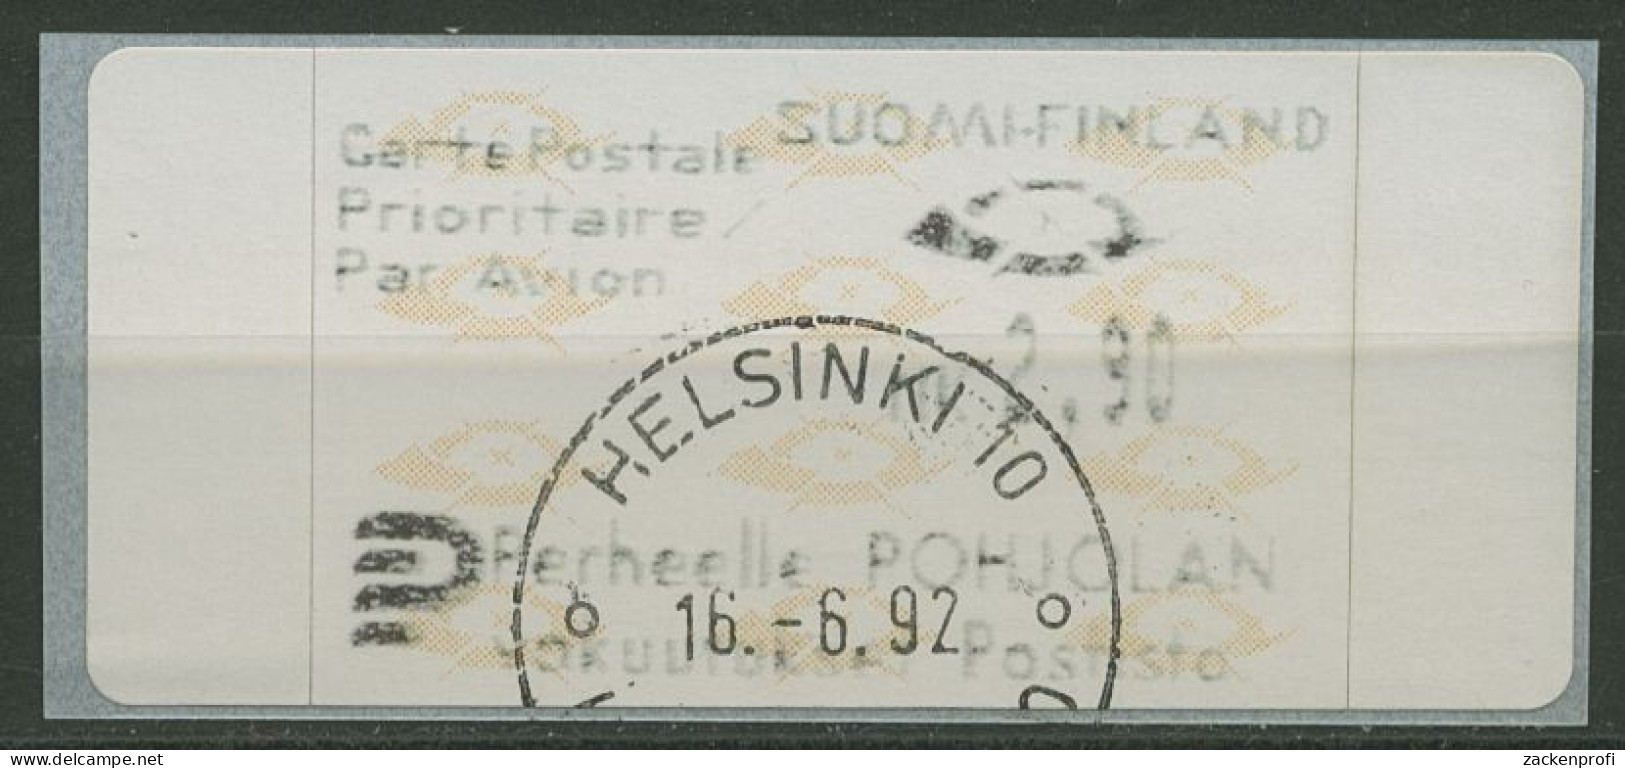 Finnland Automatenmarken 1992 Posthörner Einzelwert ATM 12.3 Z3 Gestempelt - Automaatzegels [ATM]